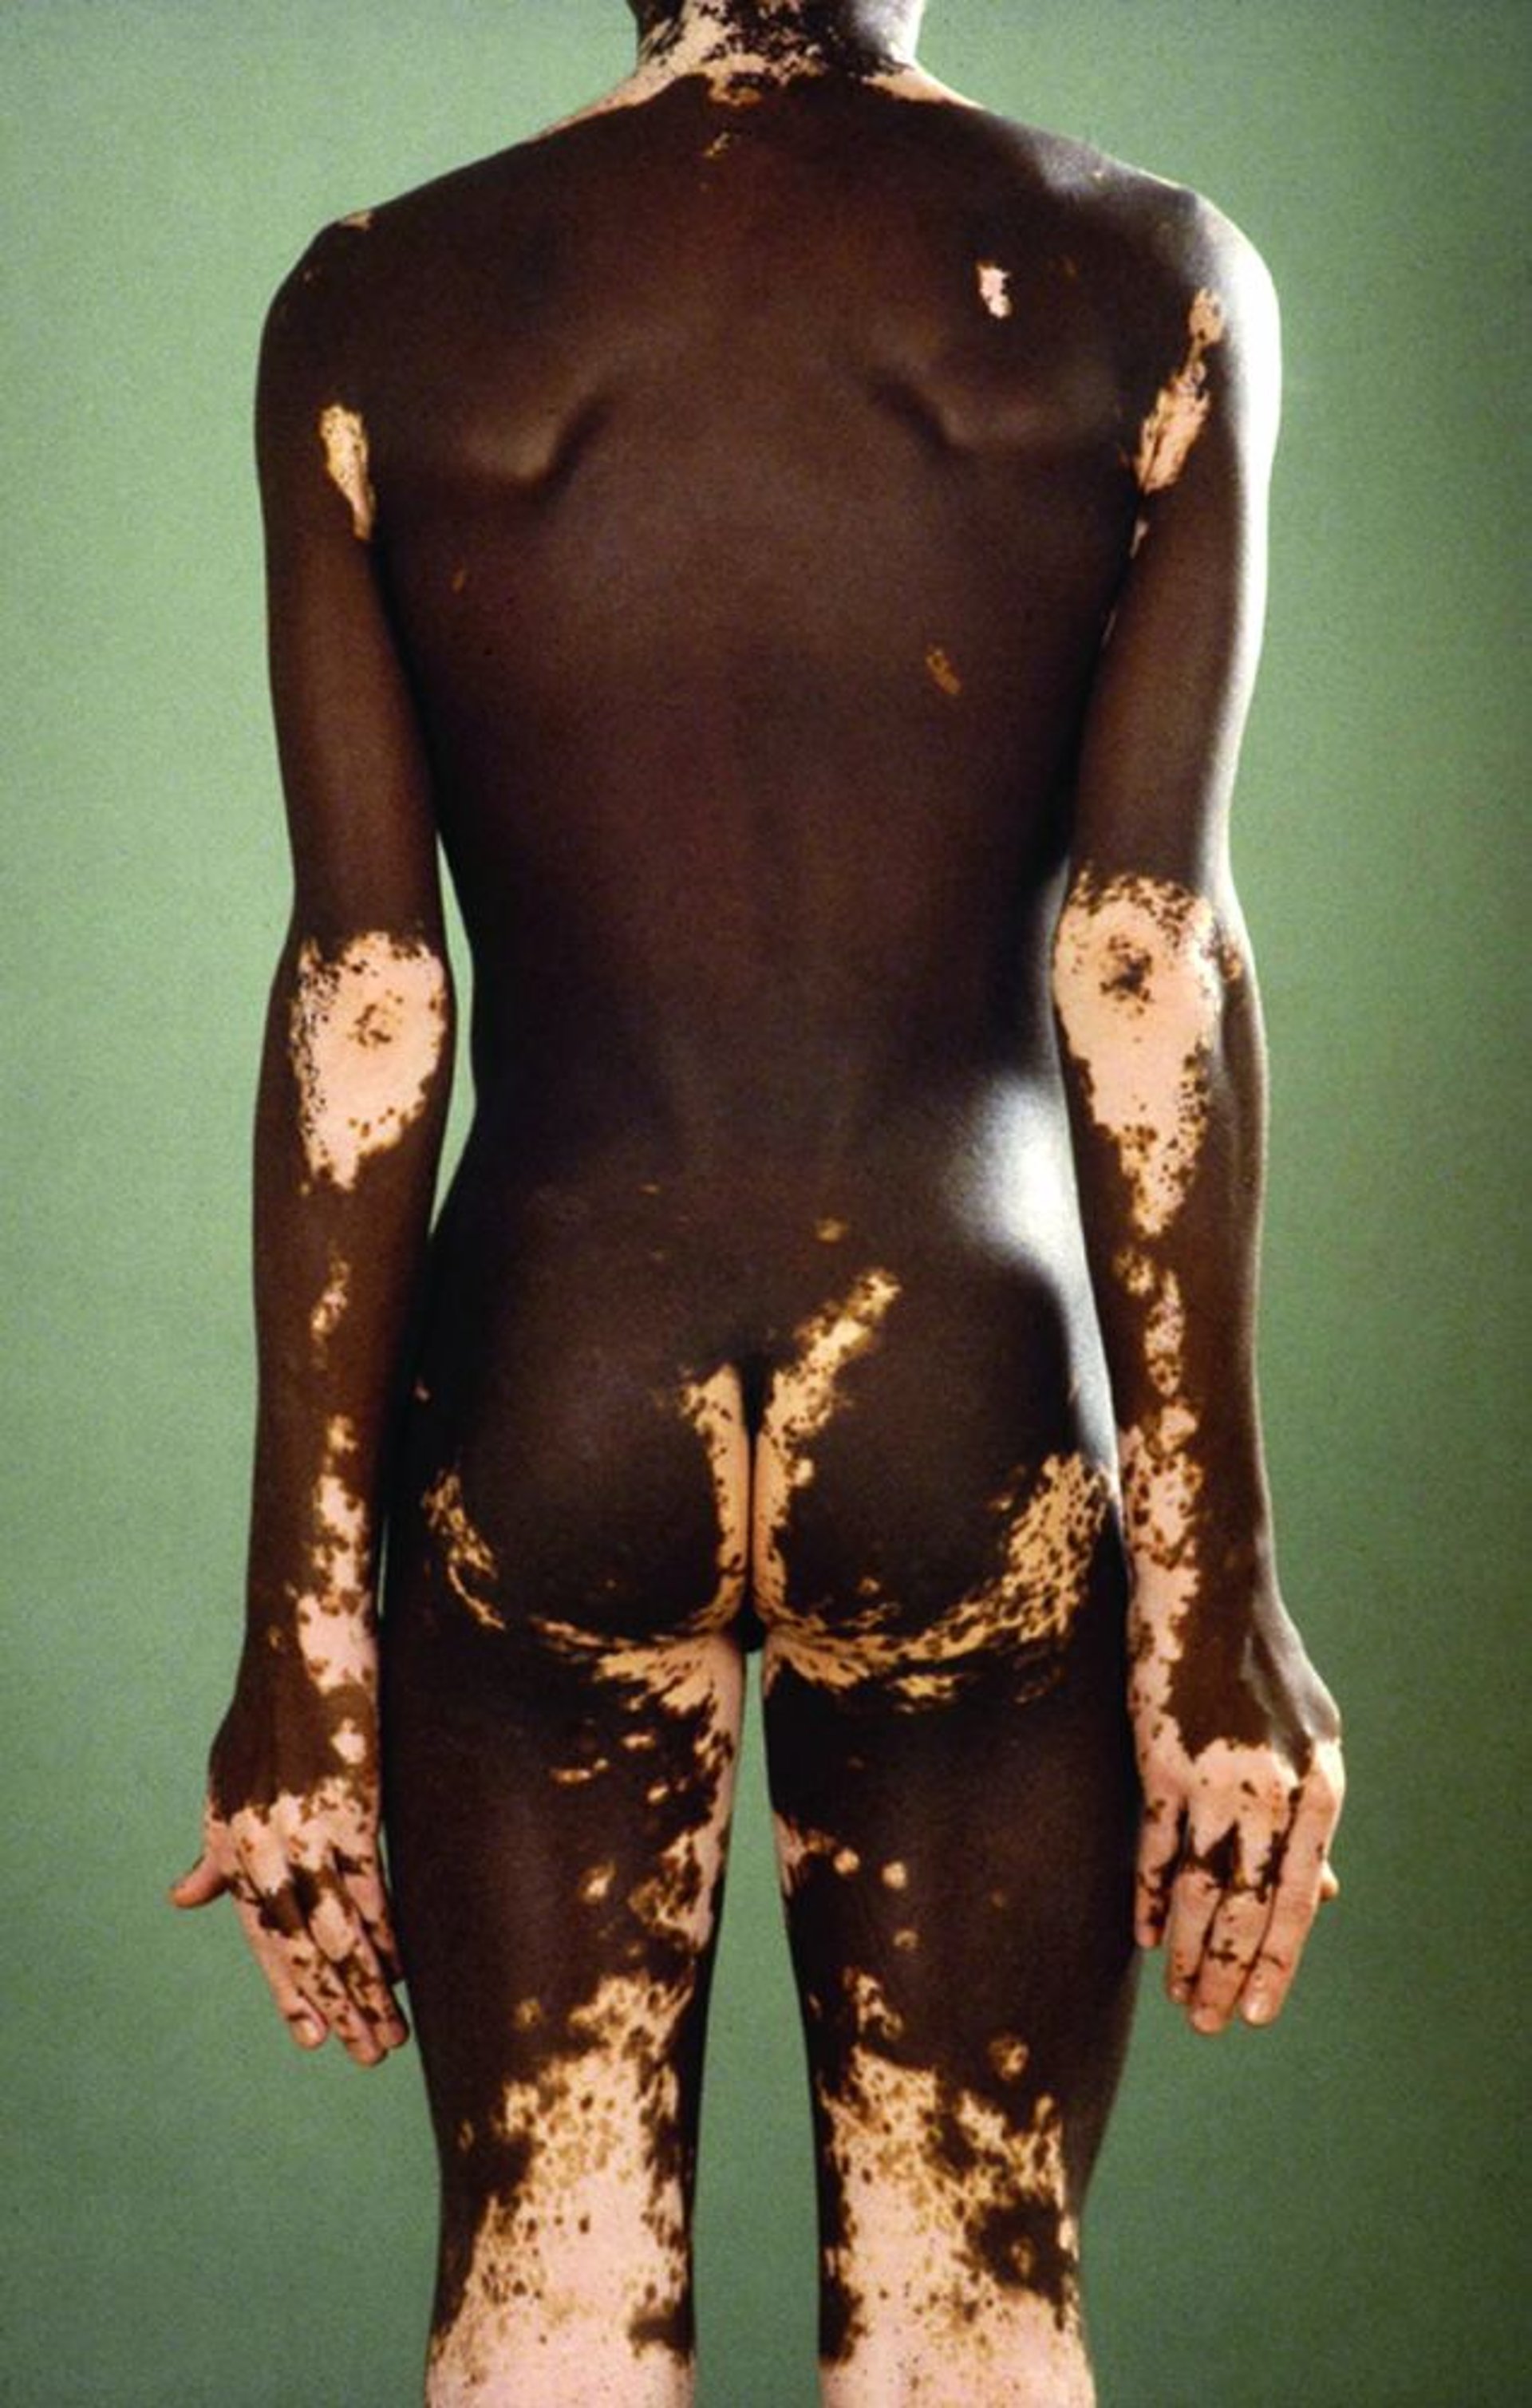 Vitiligo im Kontrast zu dunkler Haut